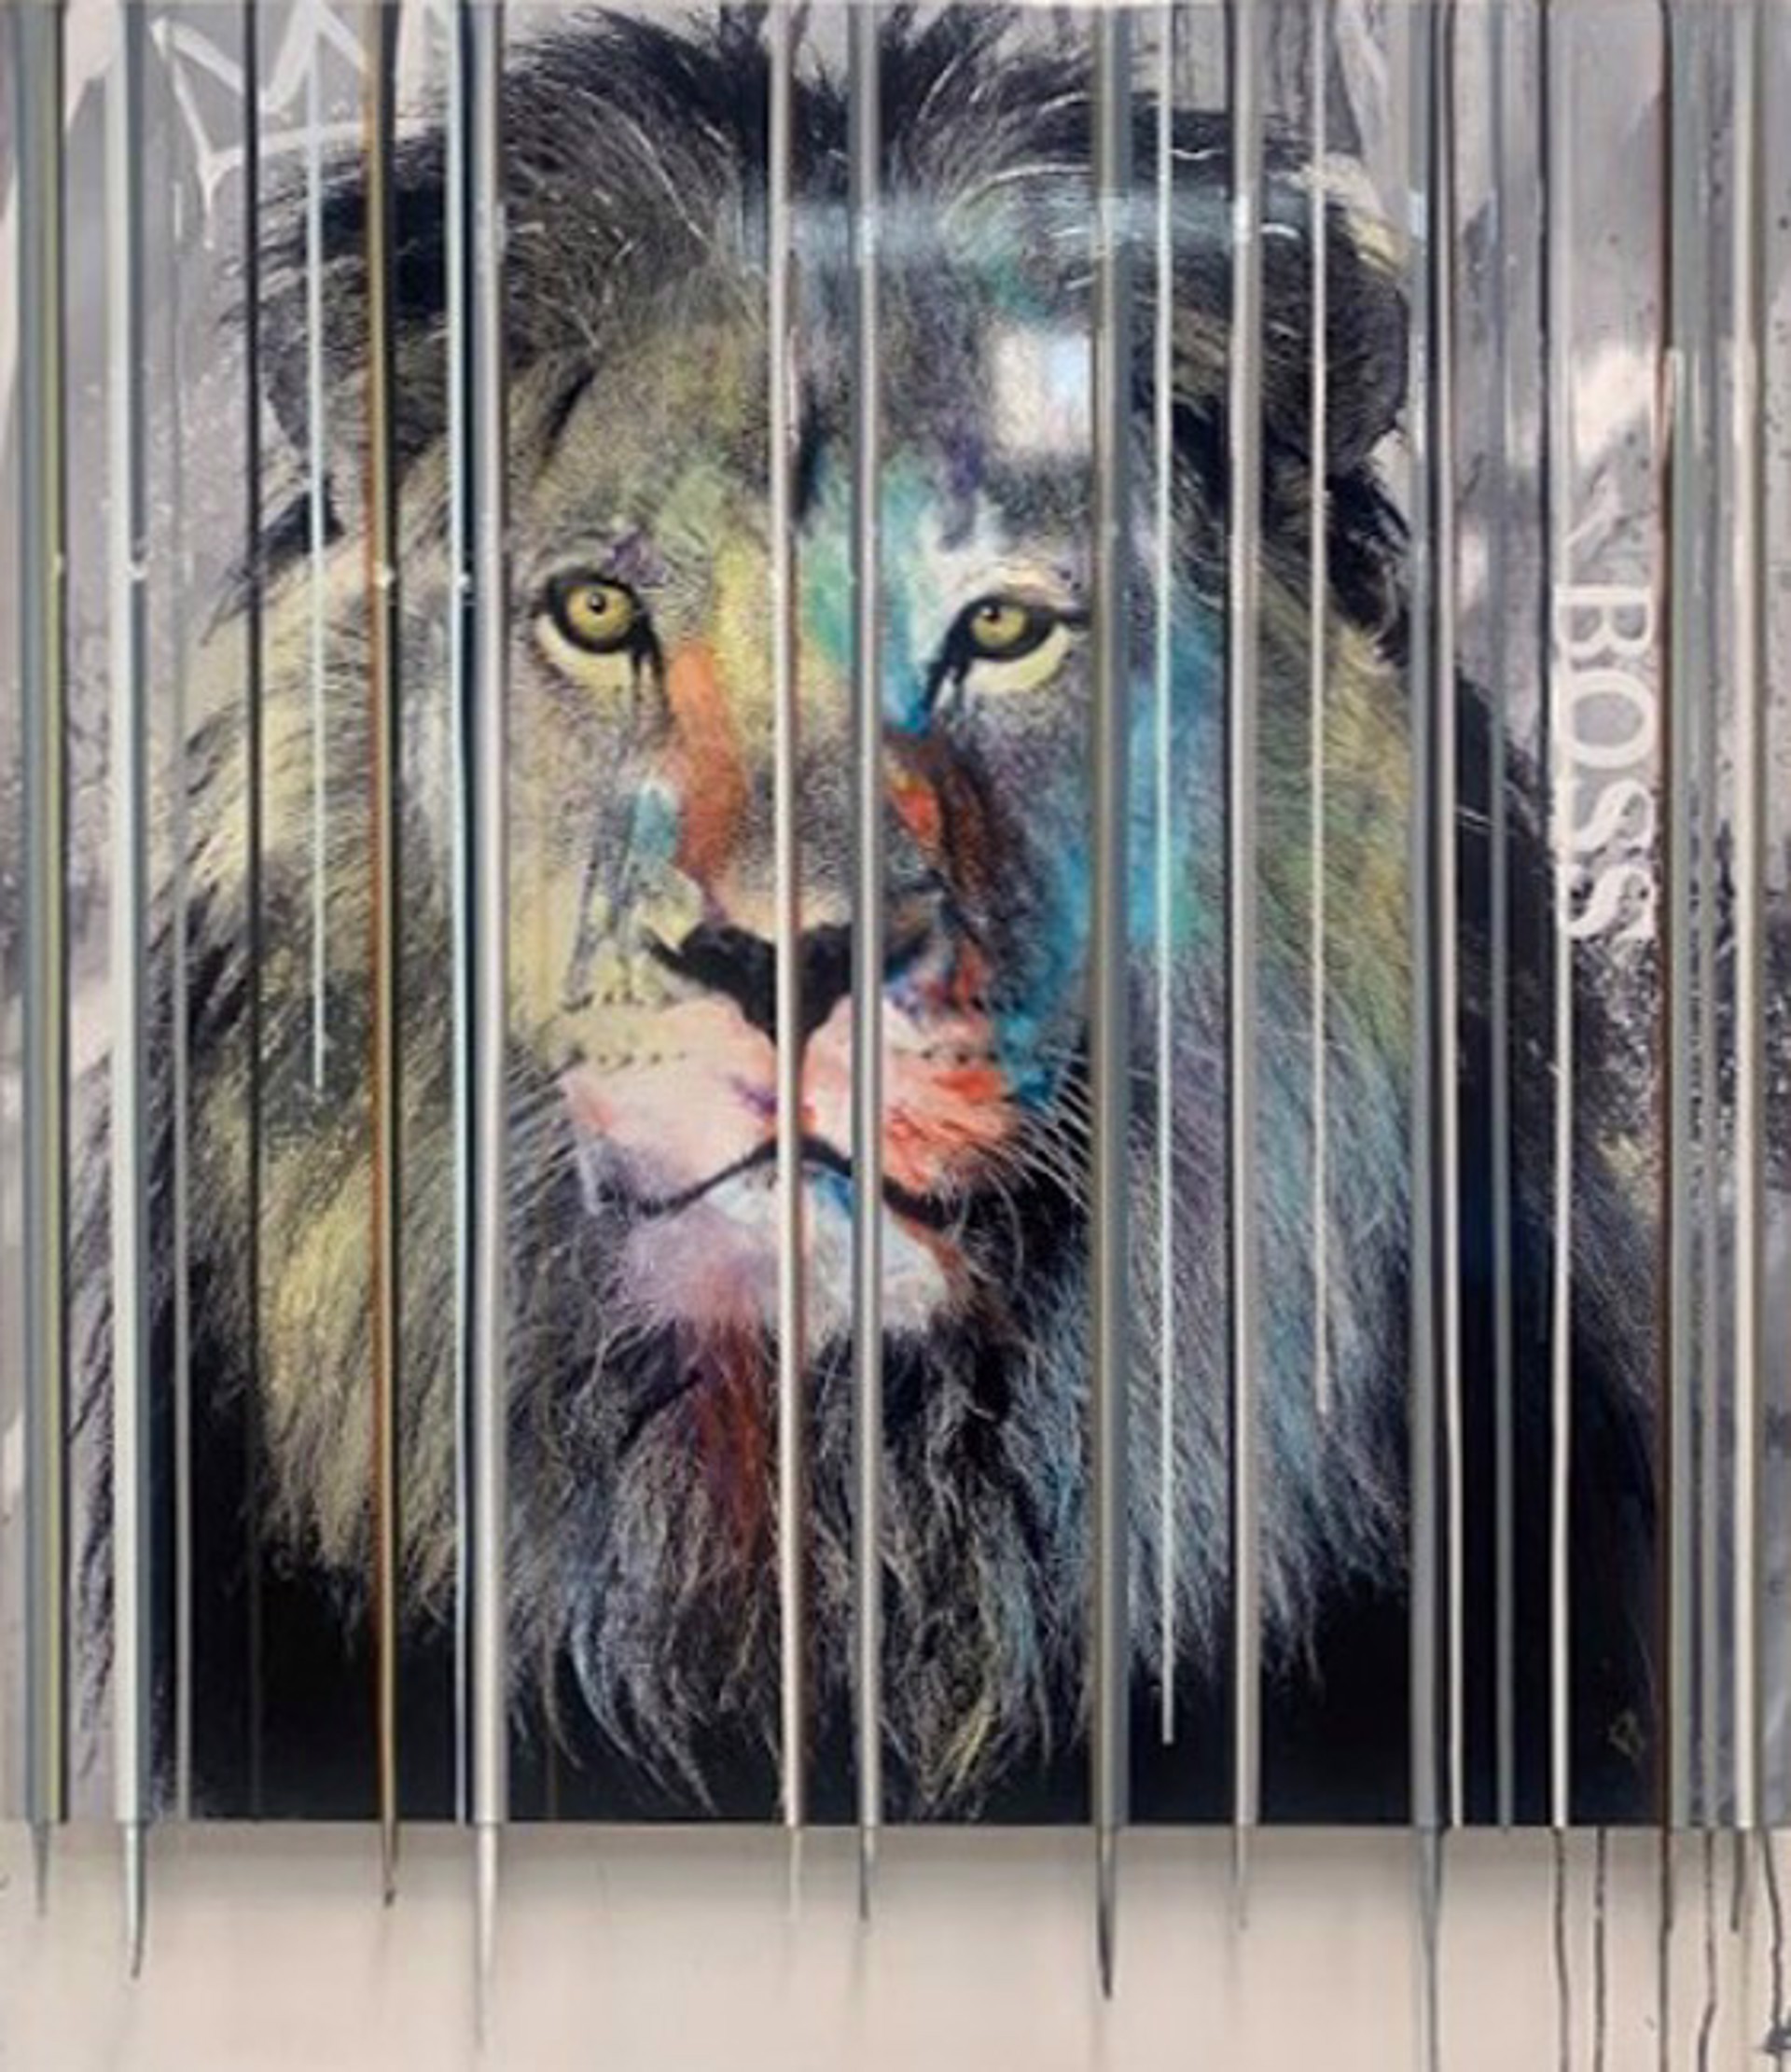 Boss Lion by Srinjoy